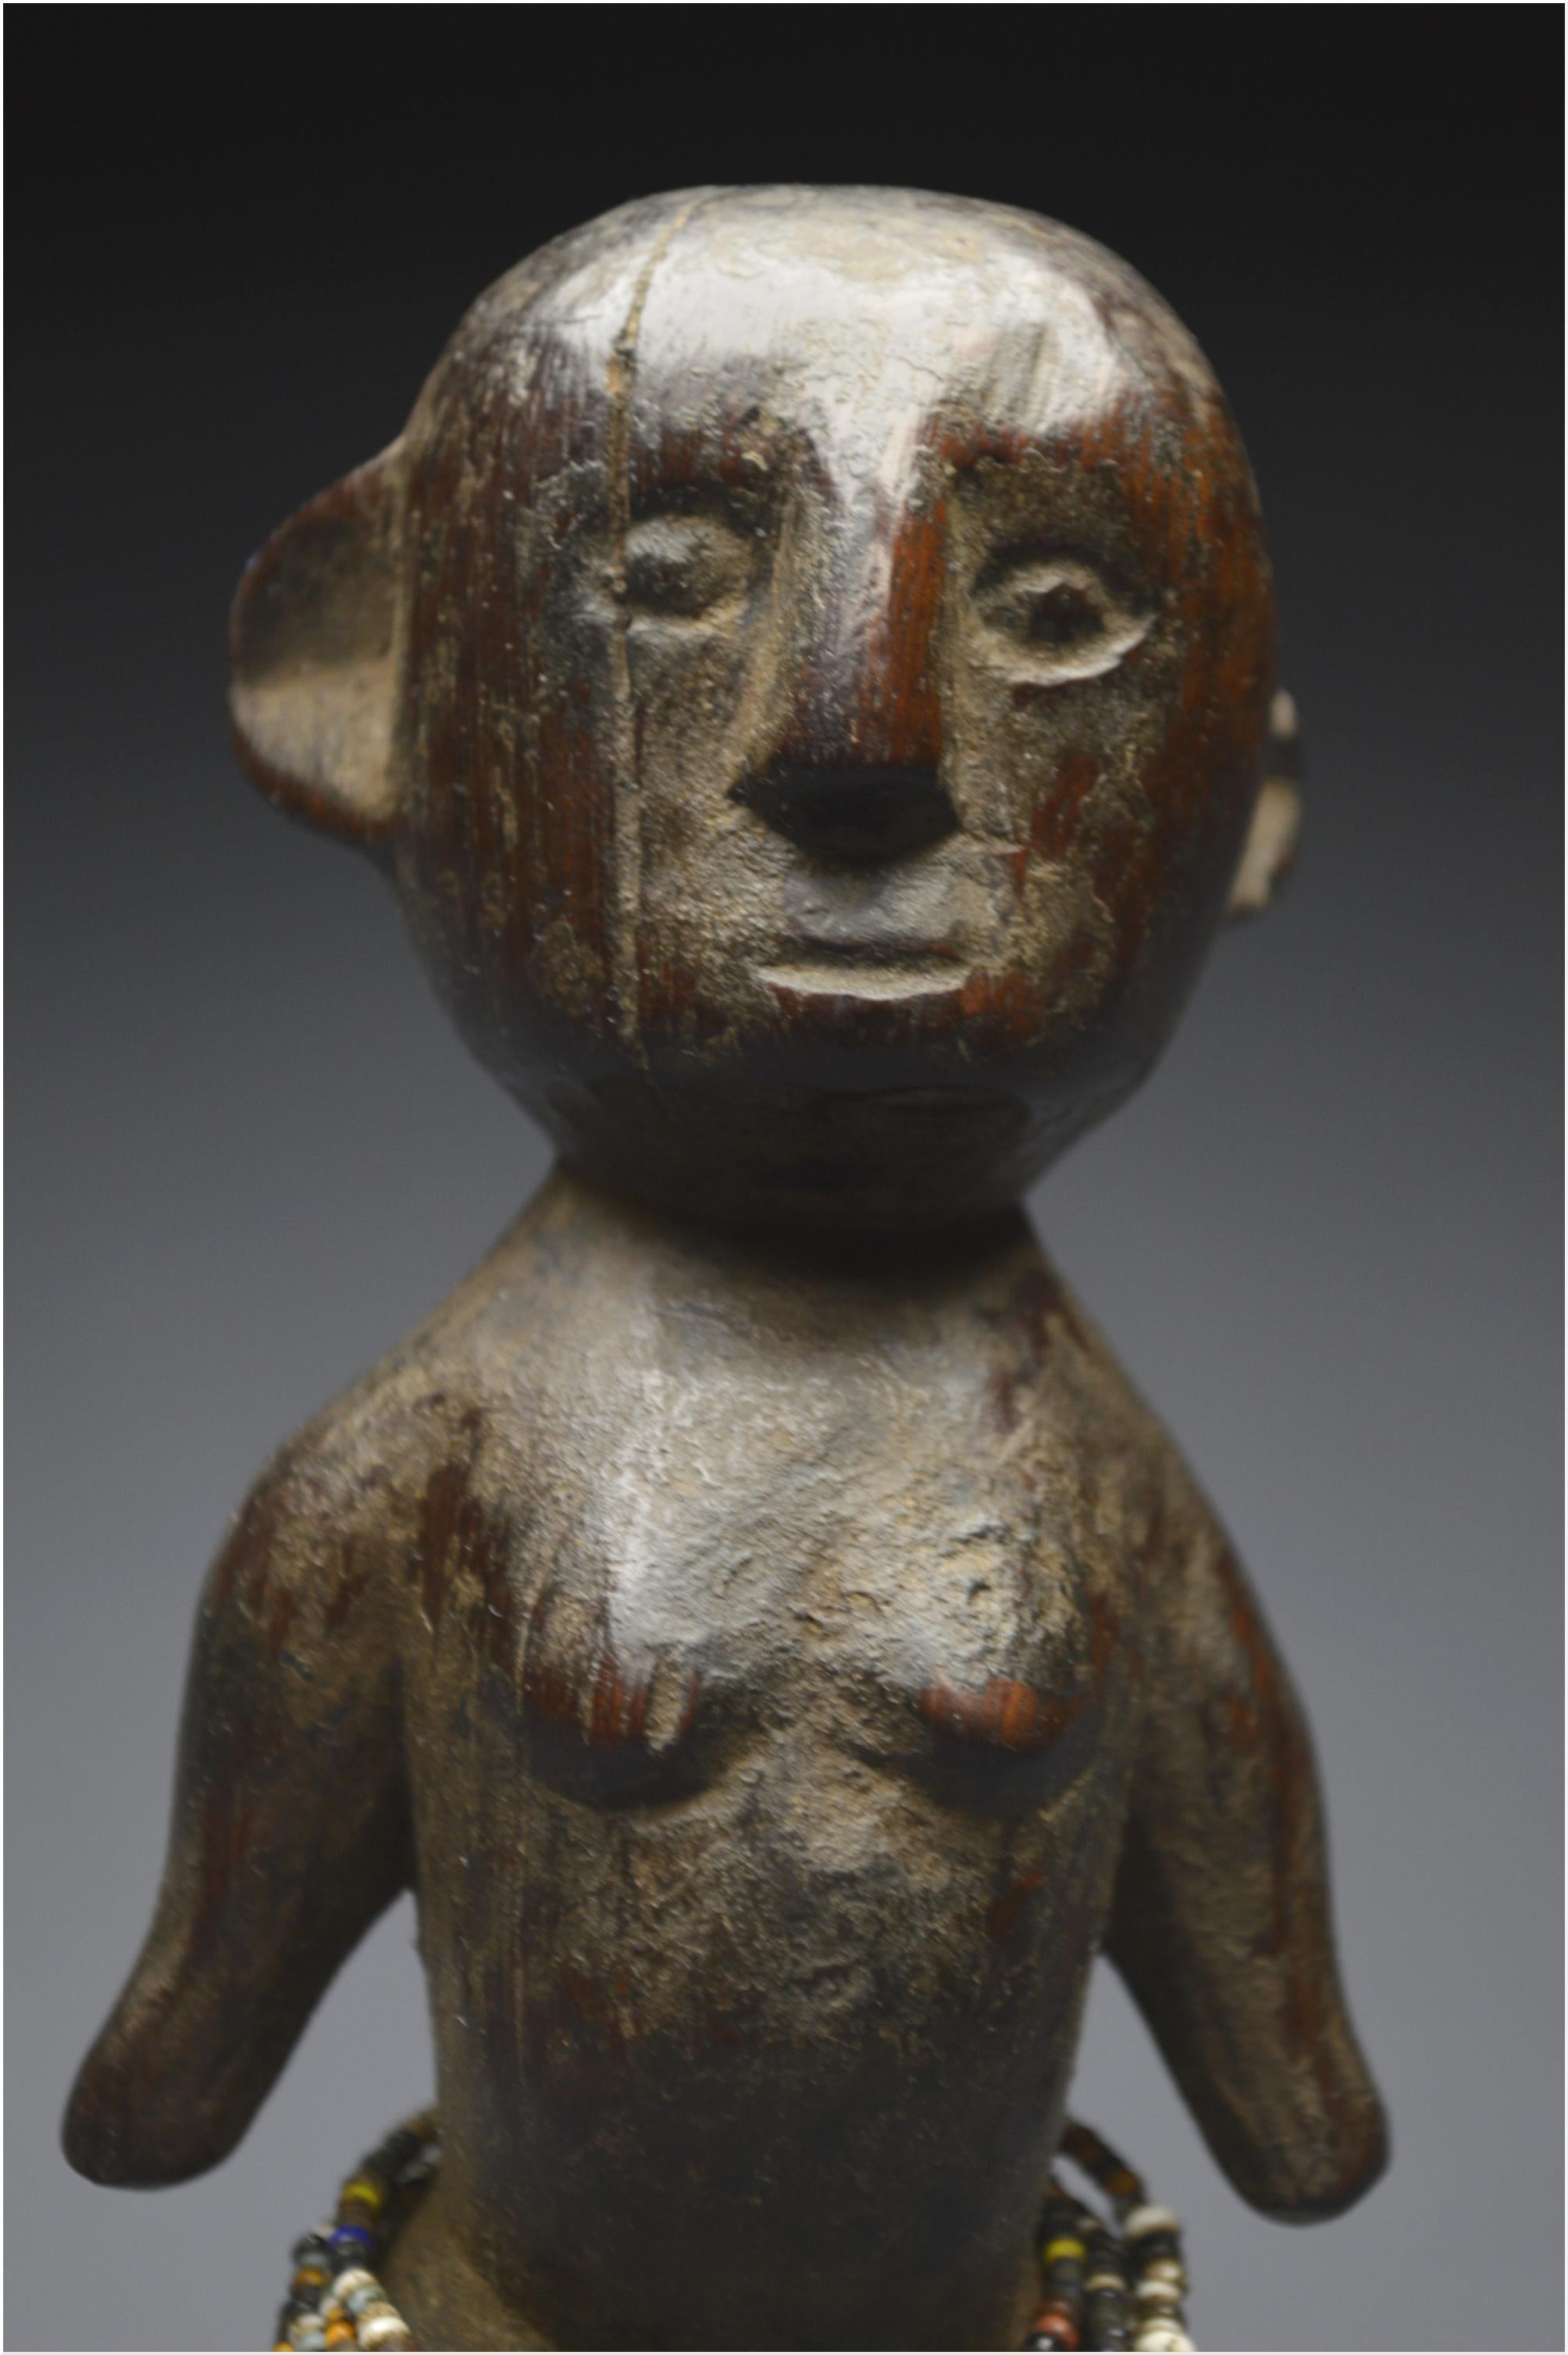 Middle of 20th Century, Tanzania, Nyamwezi People, Old Anthropomorphic Statuette 5